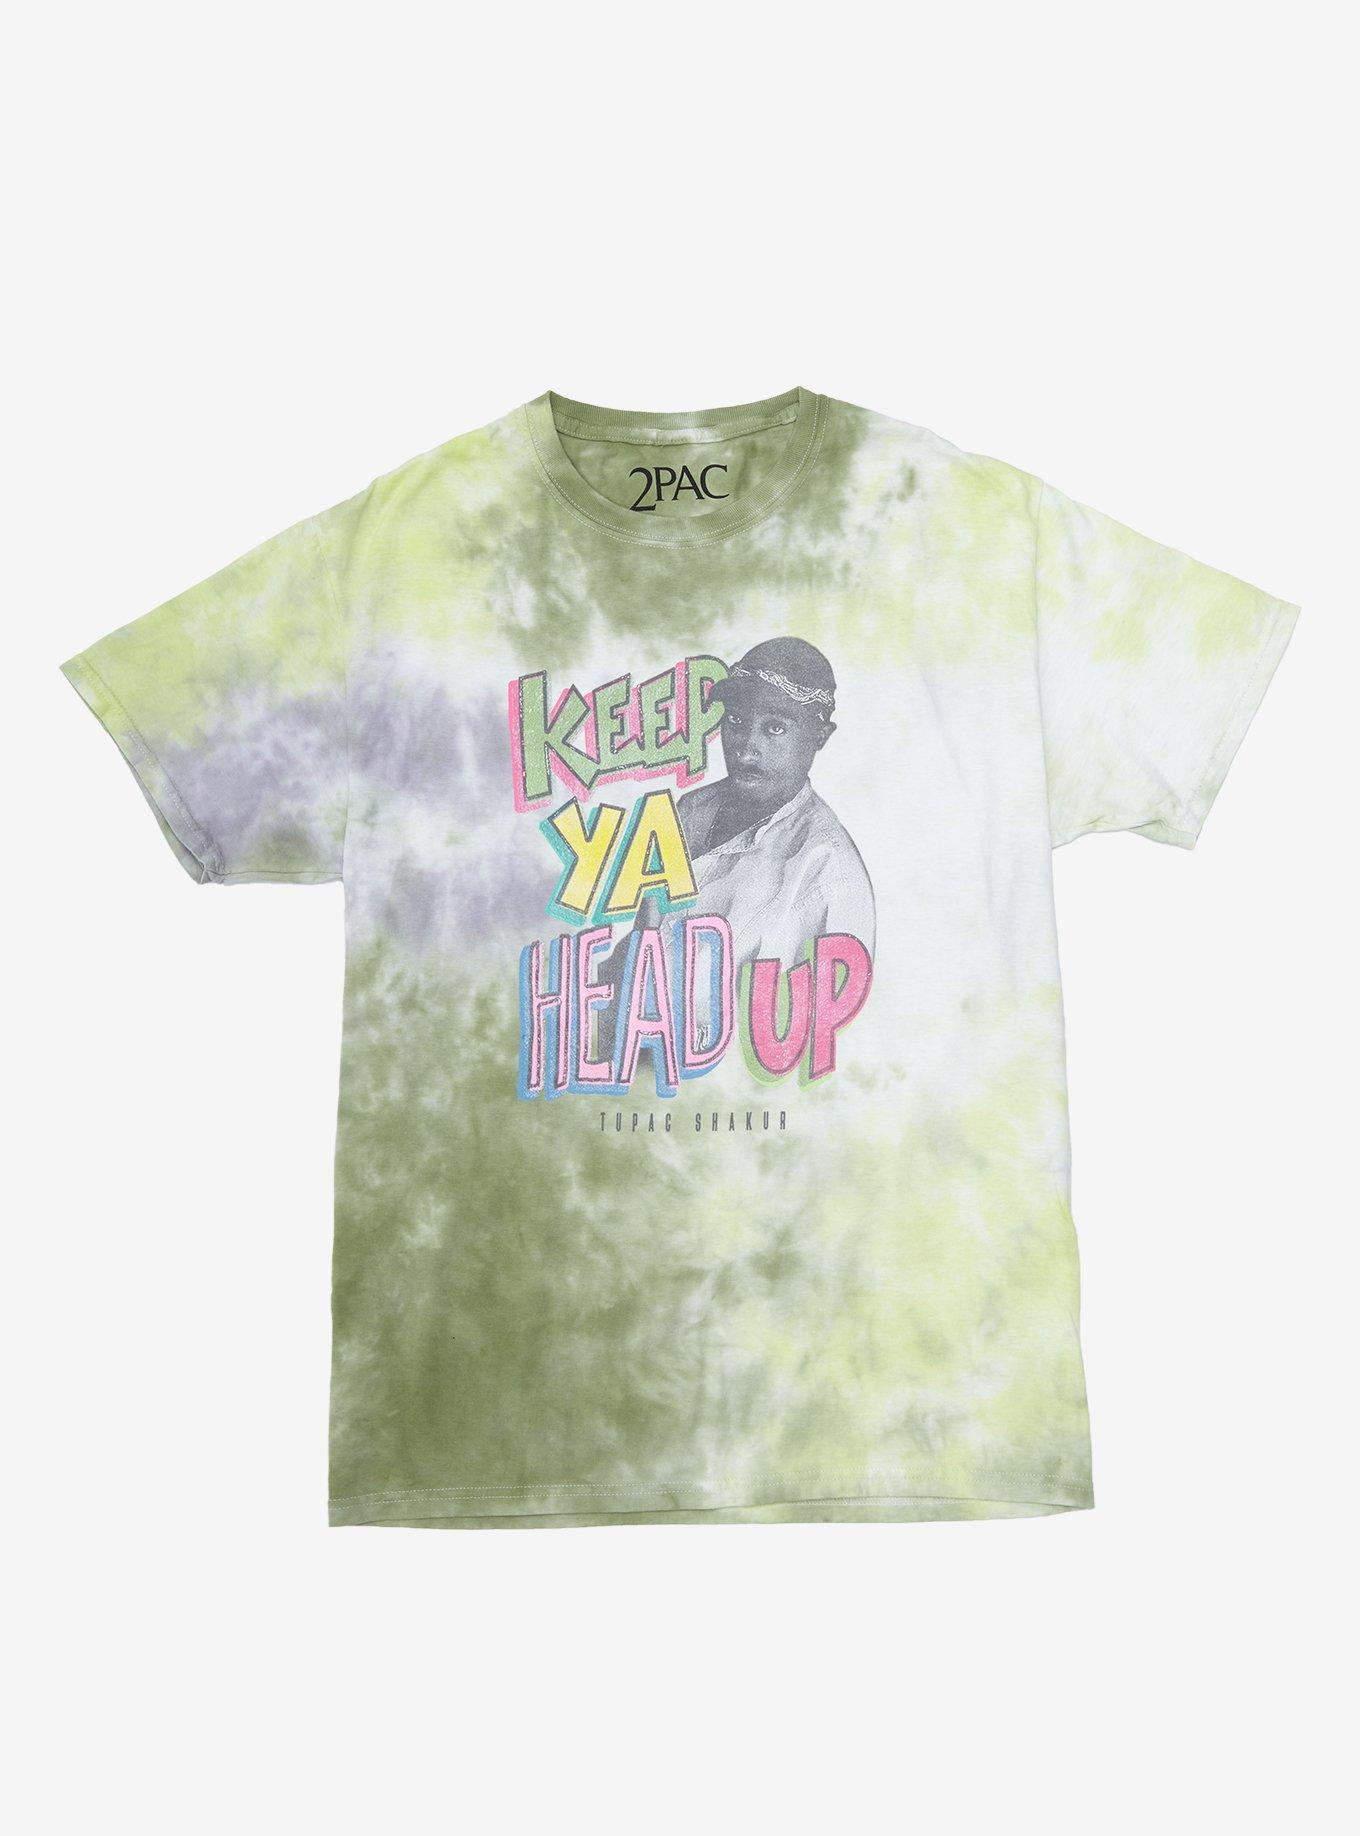 Tupac Keep Ya Head Up Tie-Dye Girls T-Shirt Hot Topic